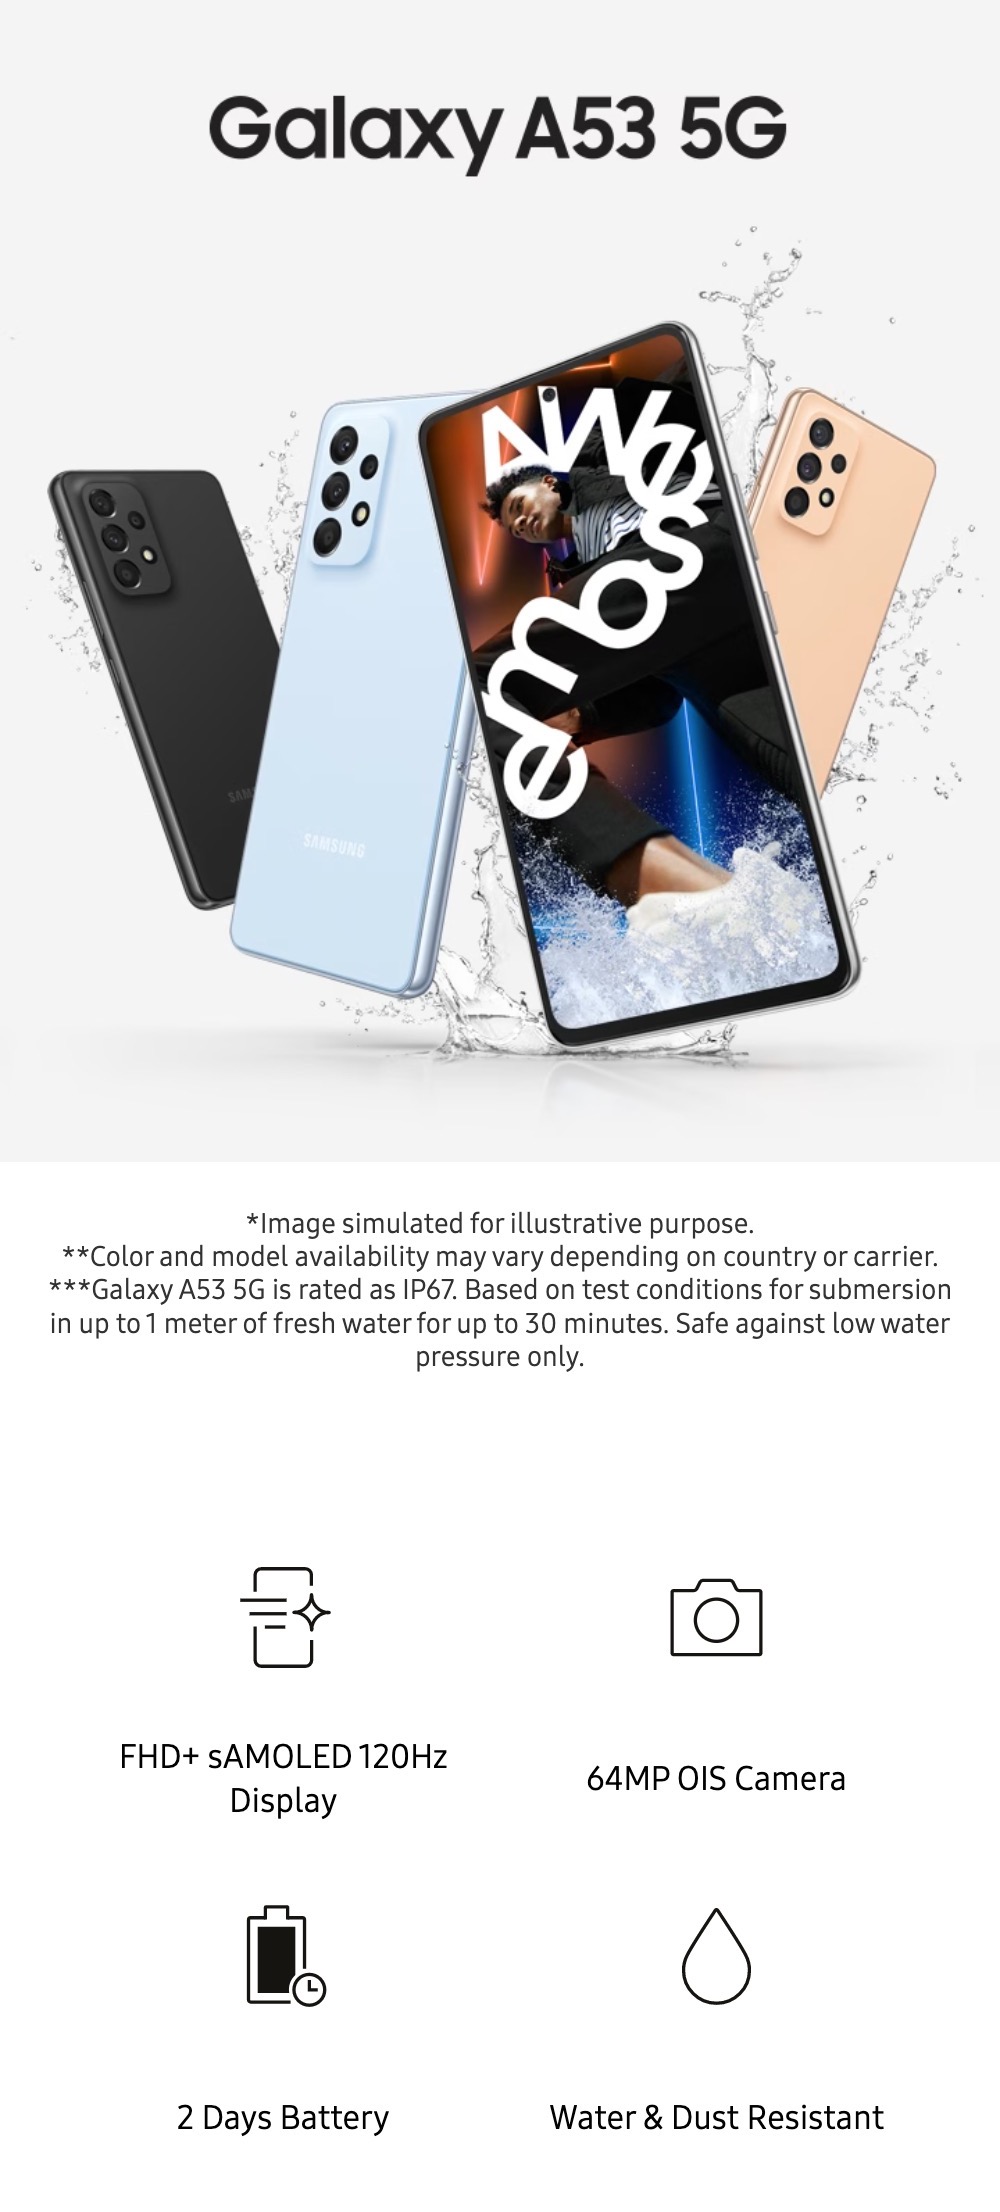 Samsung-Galaxy-A53-5G-Product-Description-1